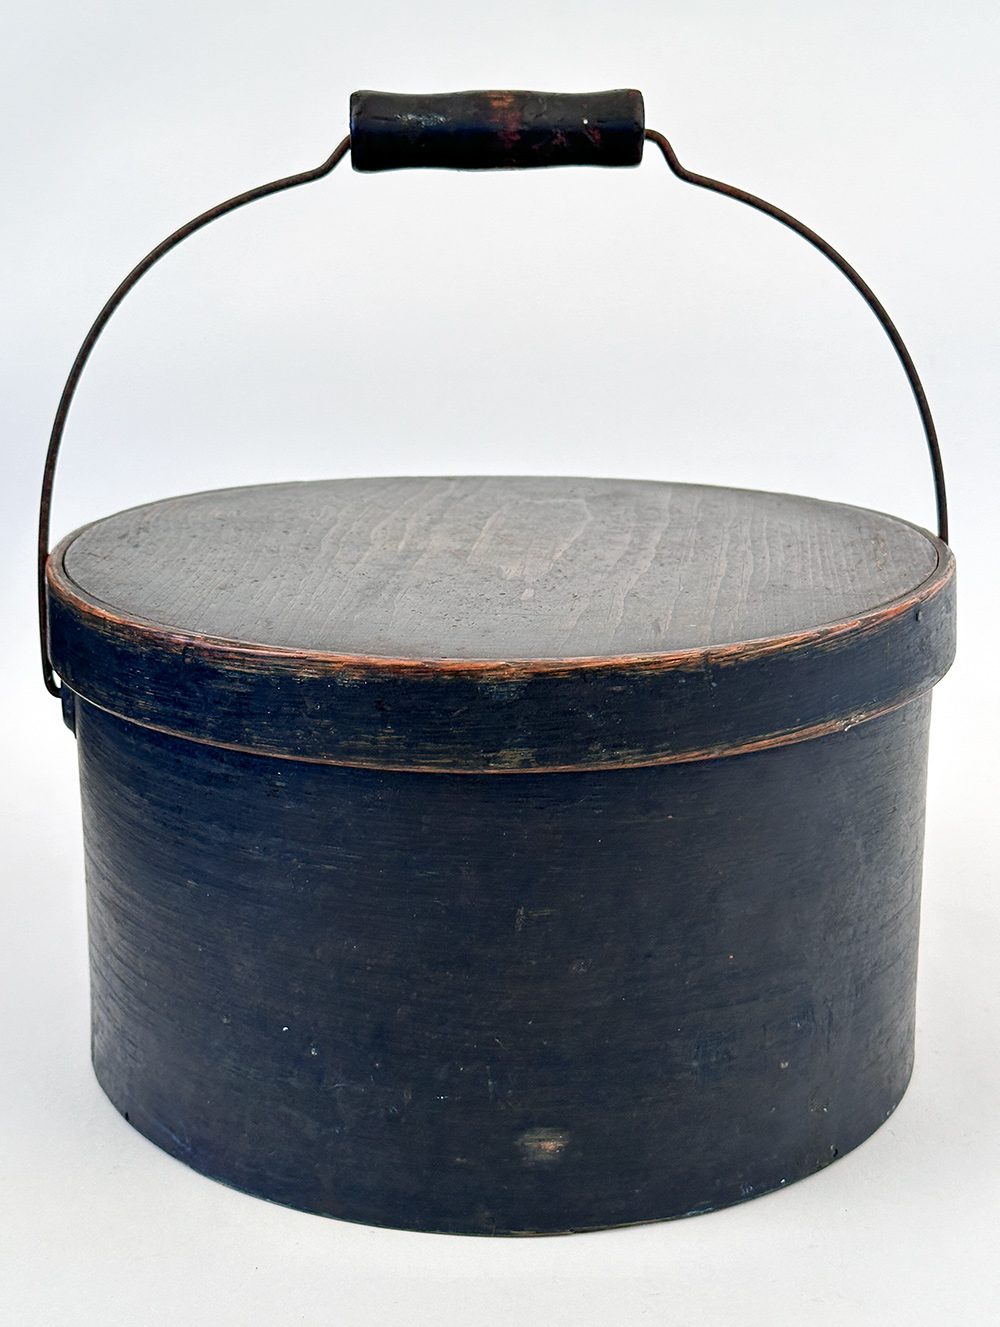 19th century bail handled pantry box in original blue paint